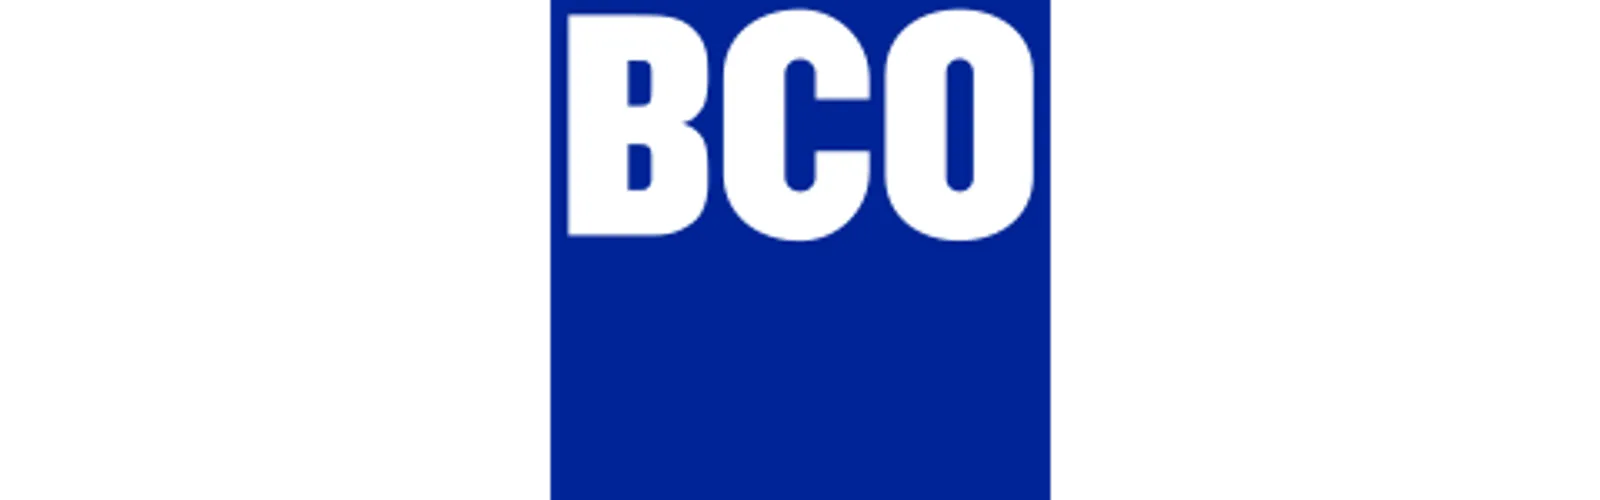 Bco accreditation